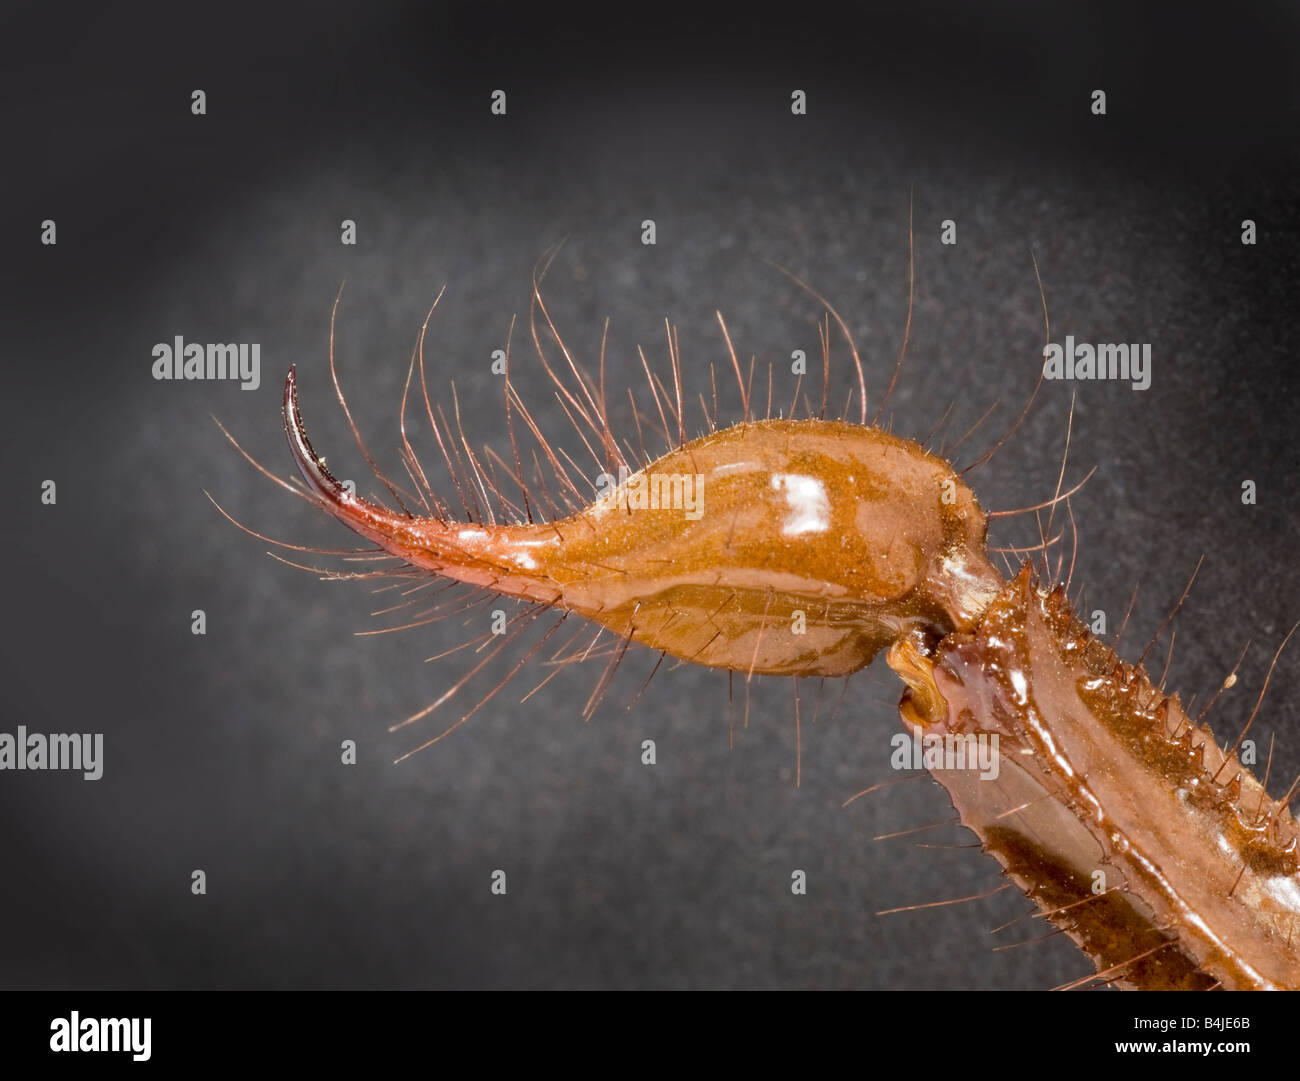 Close-up of a scorpion tail end sting, Borneo, Malaysia Stock Photo